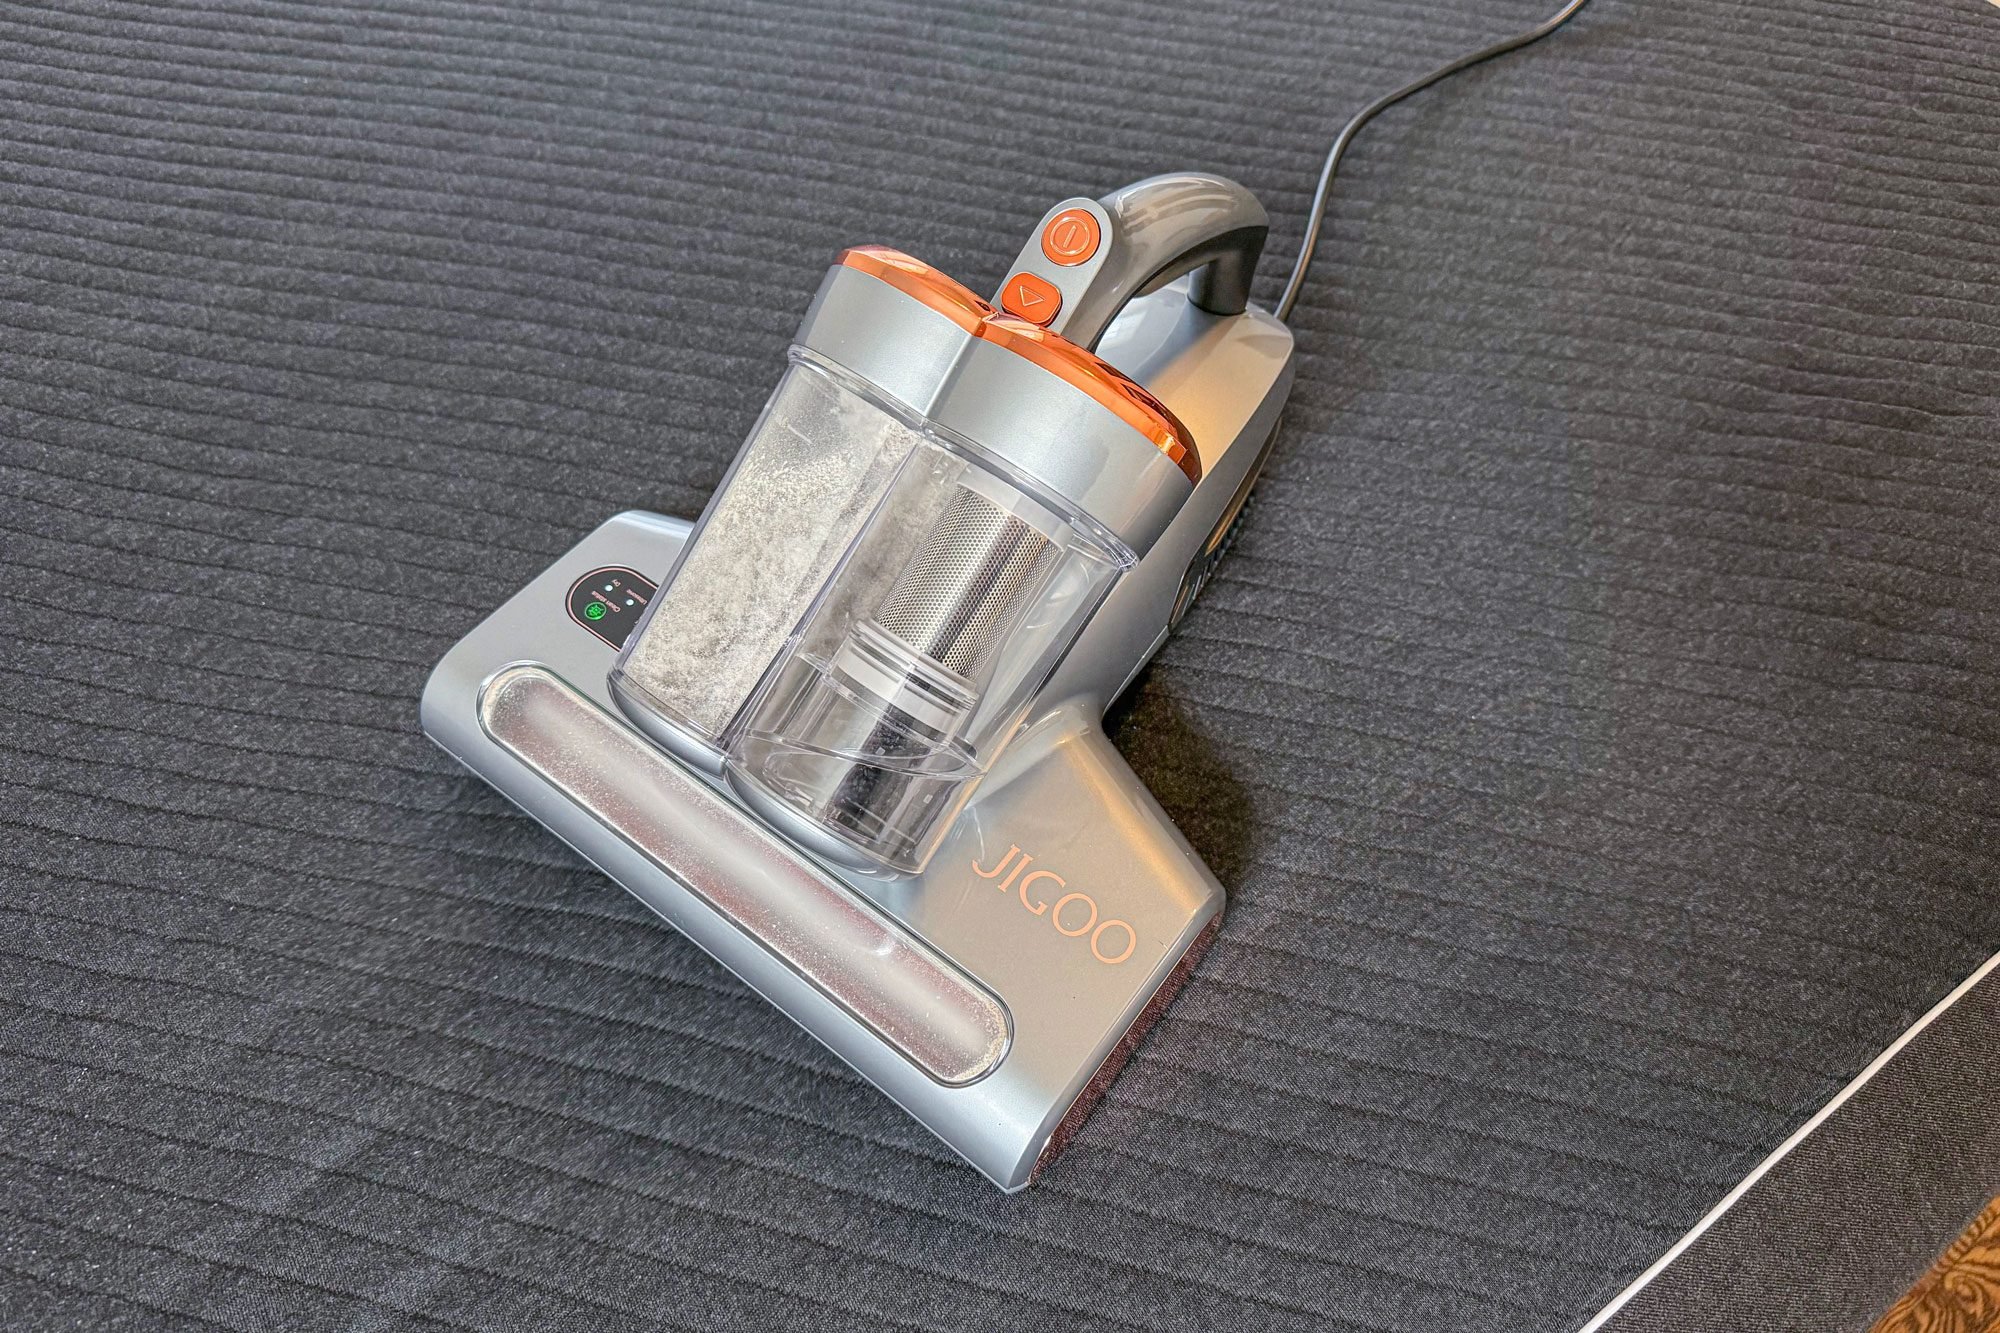 JIGOO Mattress Vacuum Cleaner: T600 Pro Bed Vacuum Cleaner with Uv